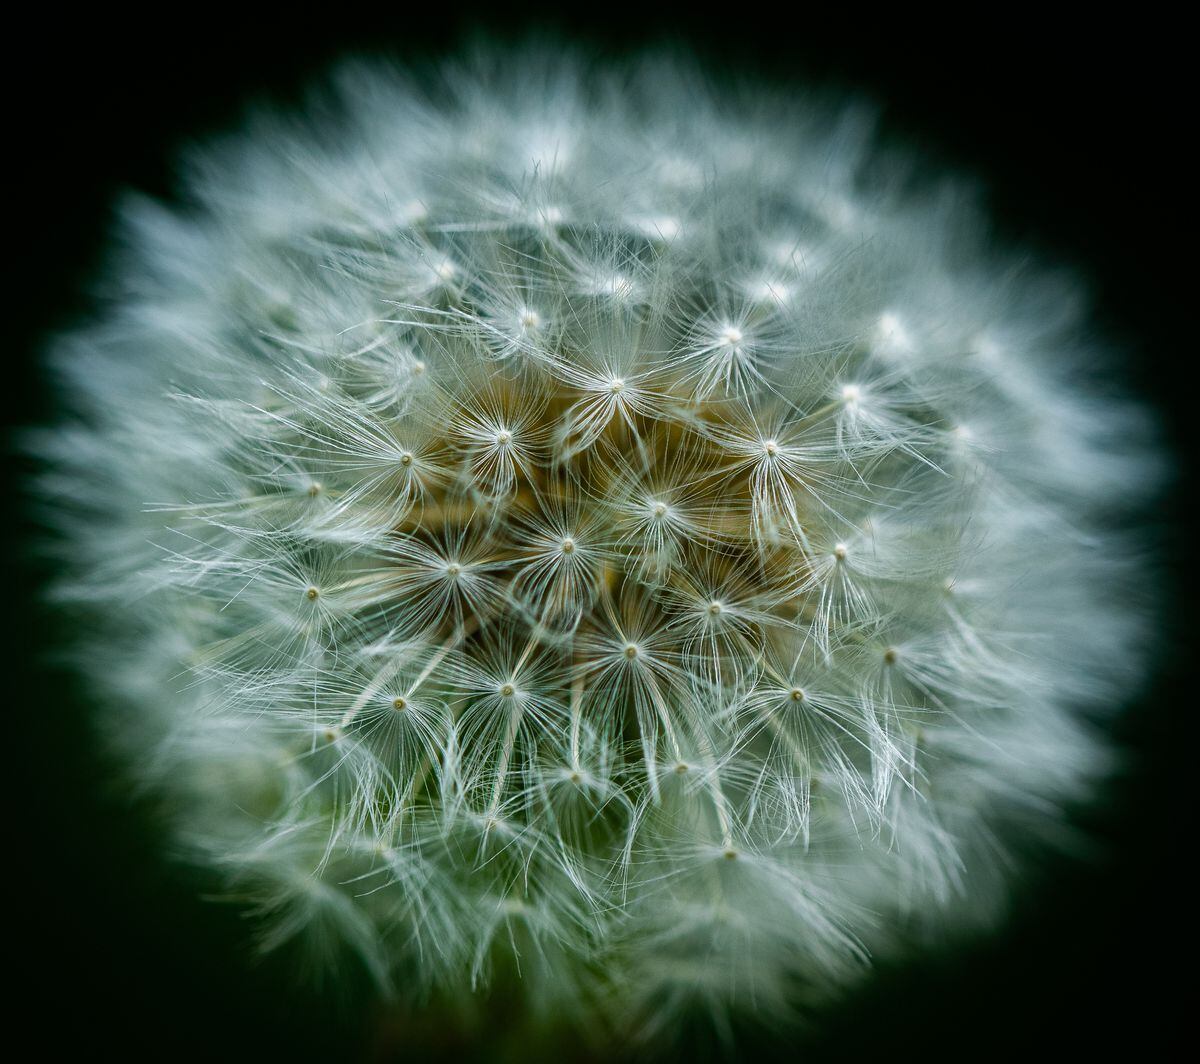 Dandelion puffball. (Picture by Richard Leighton-Hammond, 32125274)